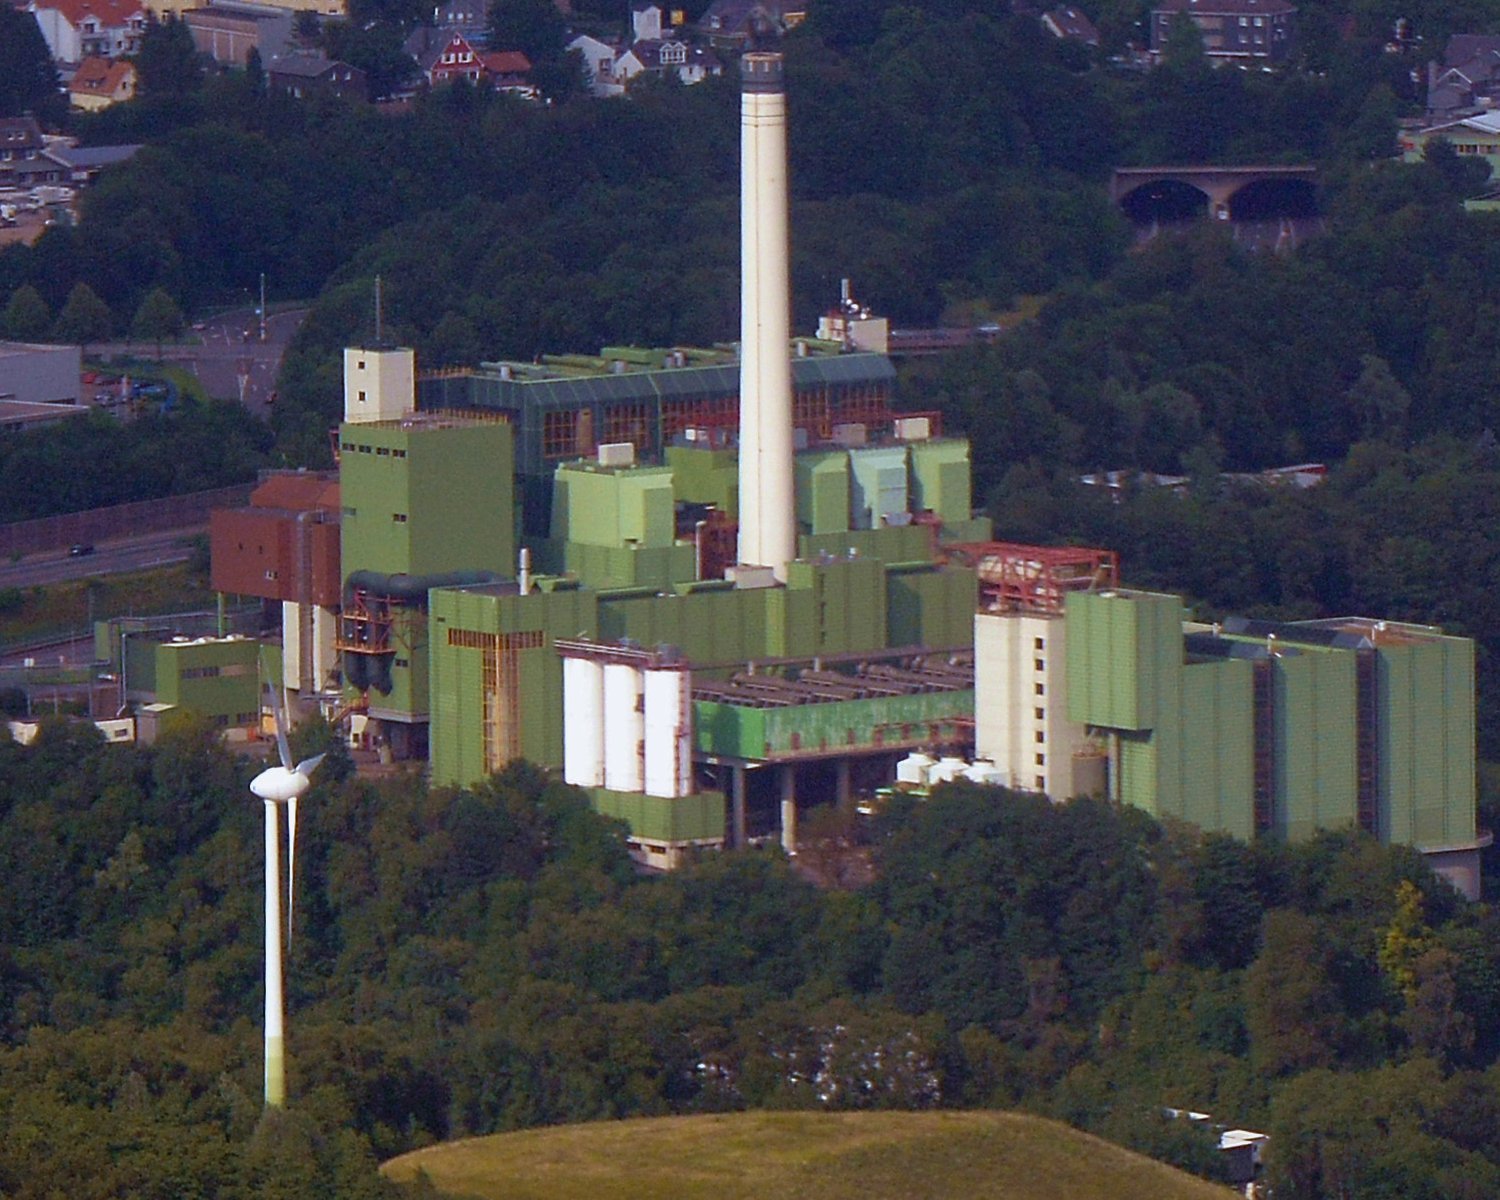 Müllverbrennungsanlage Wuppertal (c) Krd auf commons.wikimedia.org / CC-SA-BY 4.0